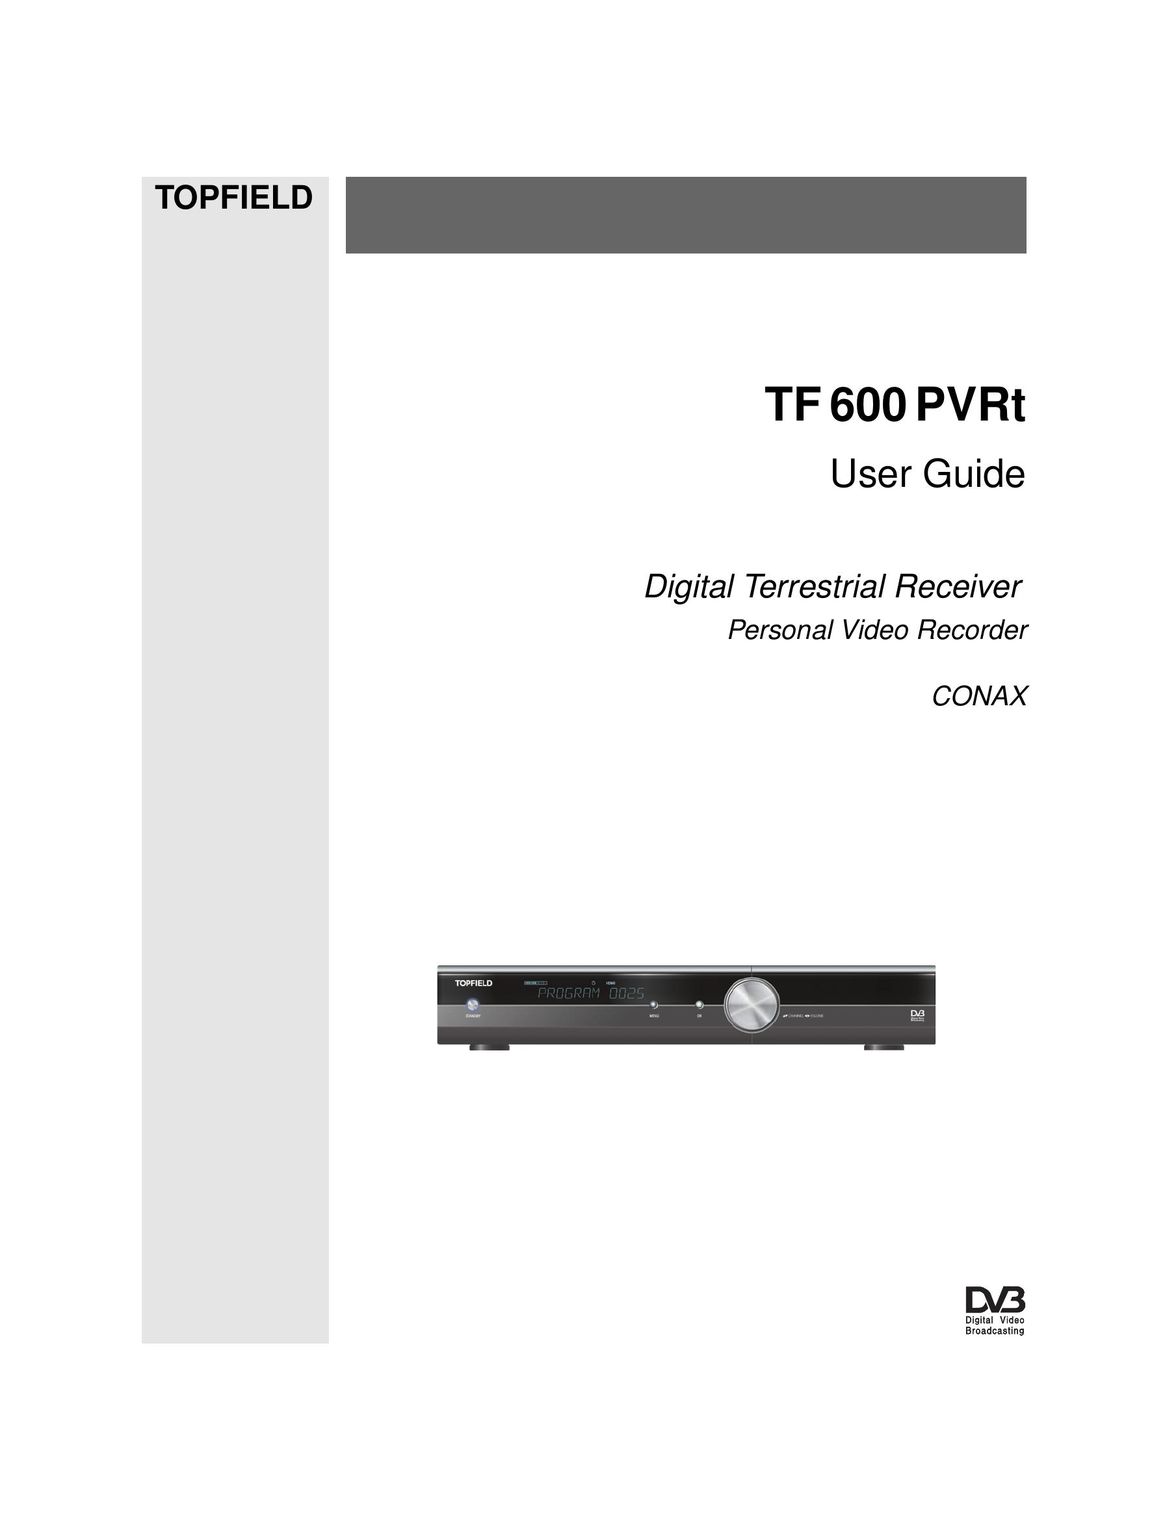 Topfield TF 600 PVRt DVR User Manual